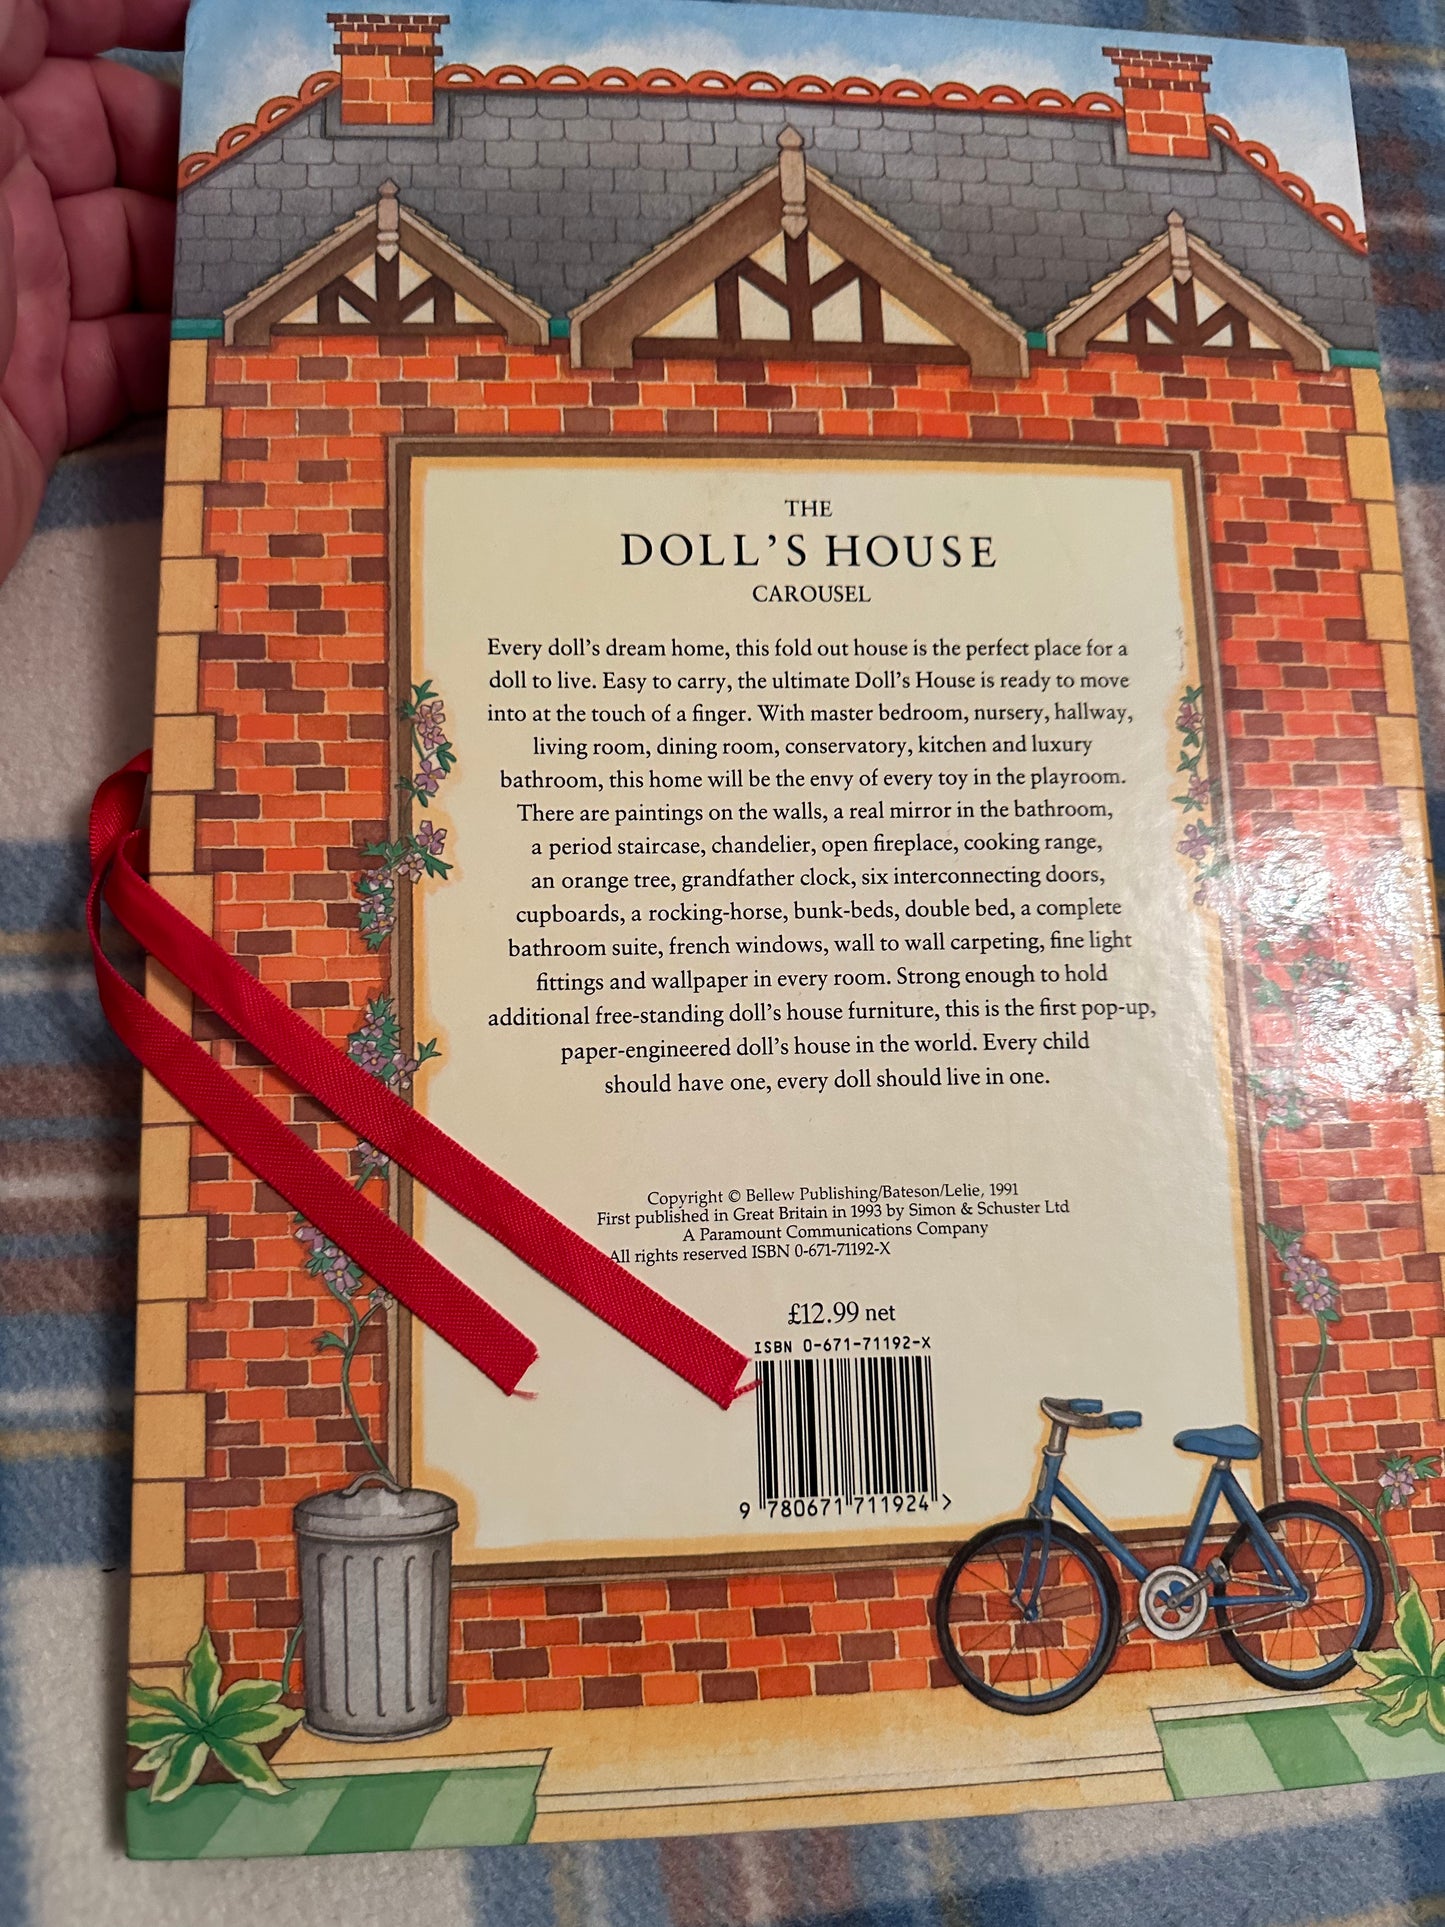 1993 The Doll’s House Carousel - Maggie Bateson & Herman Lelie (Simon & Schuster)